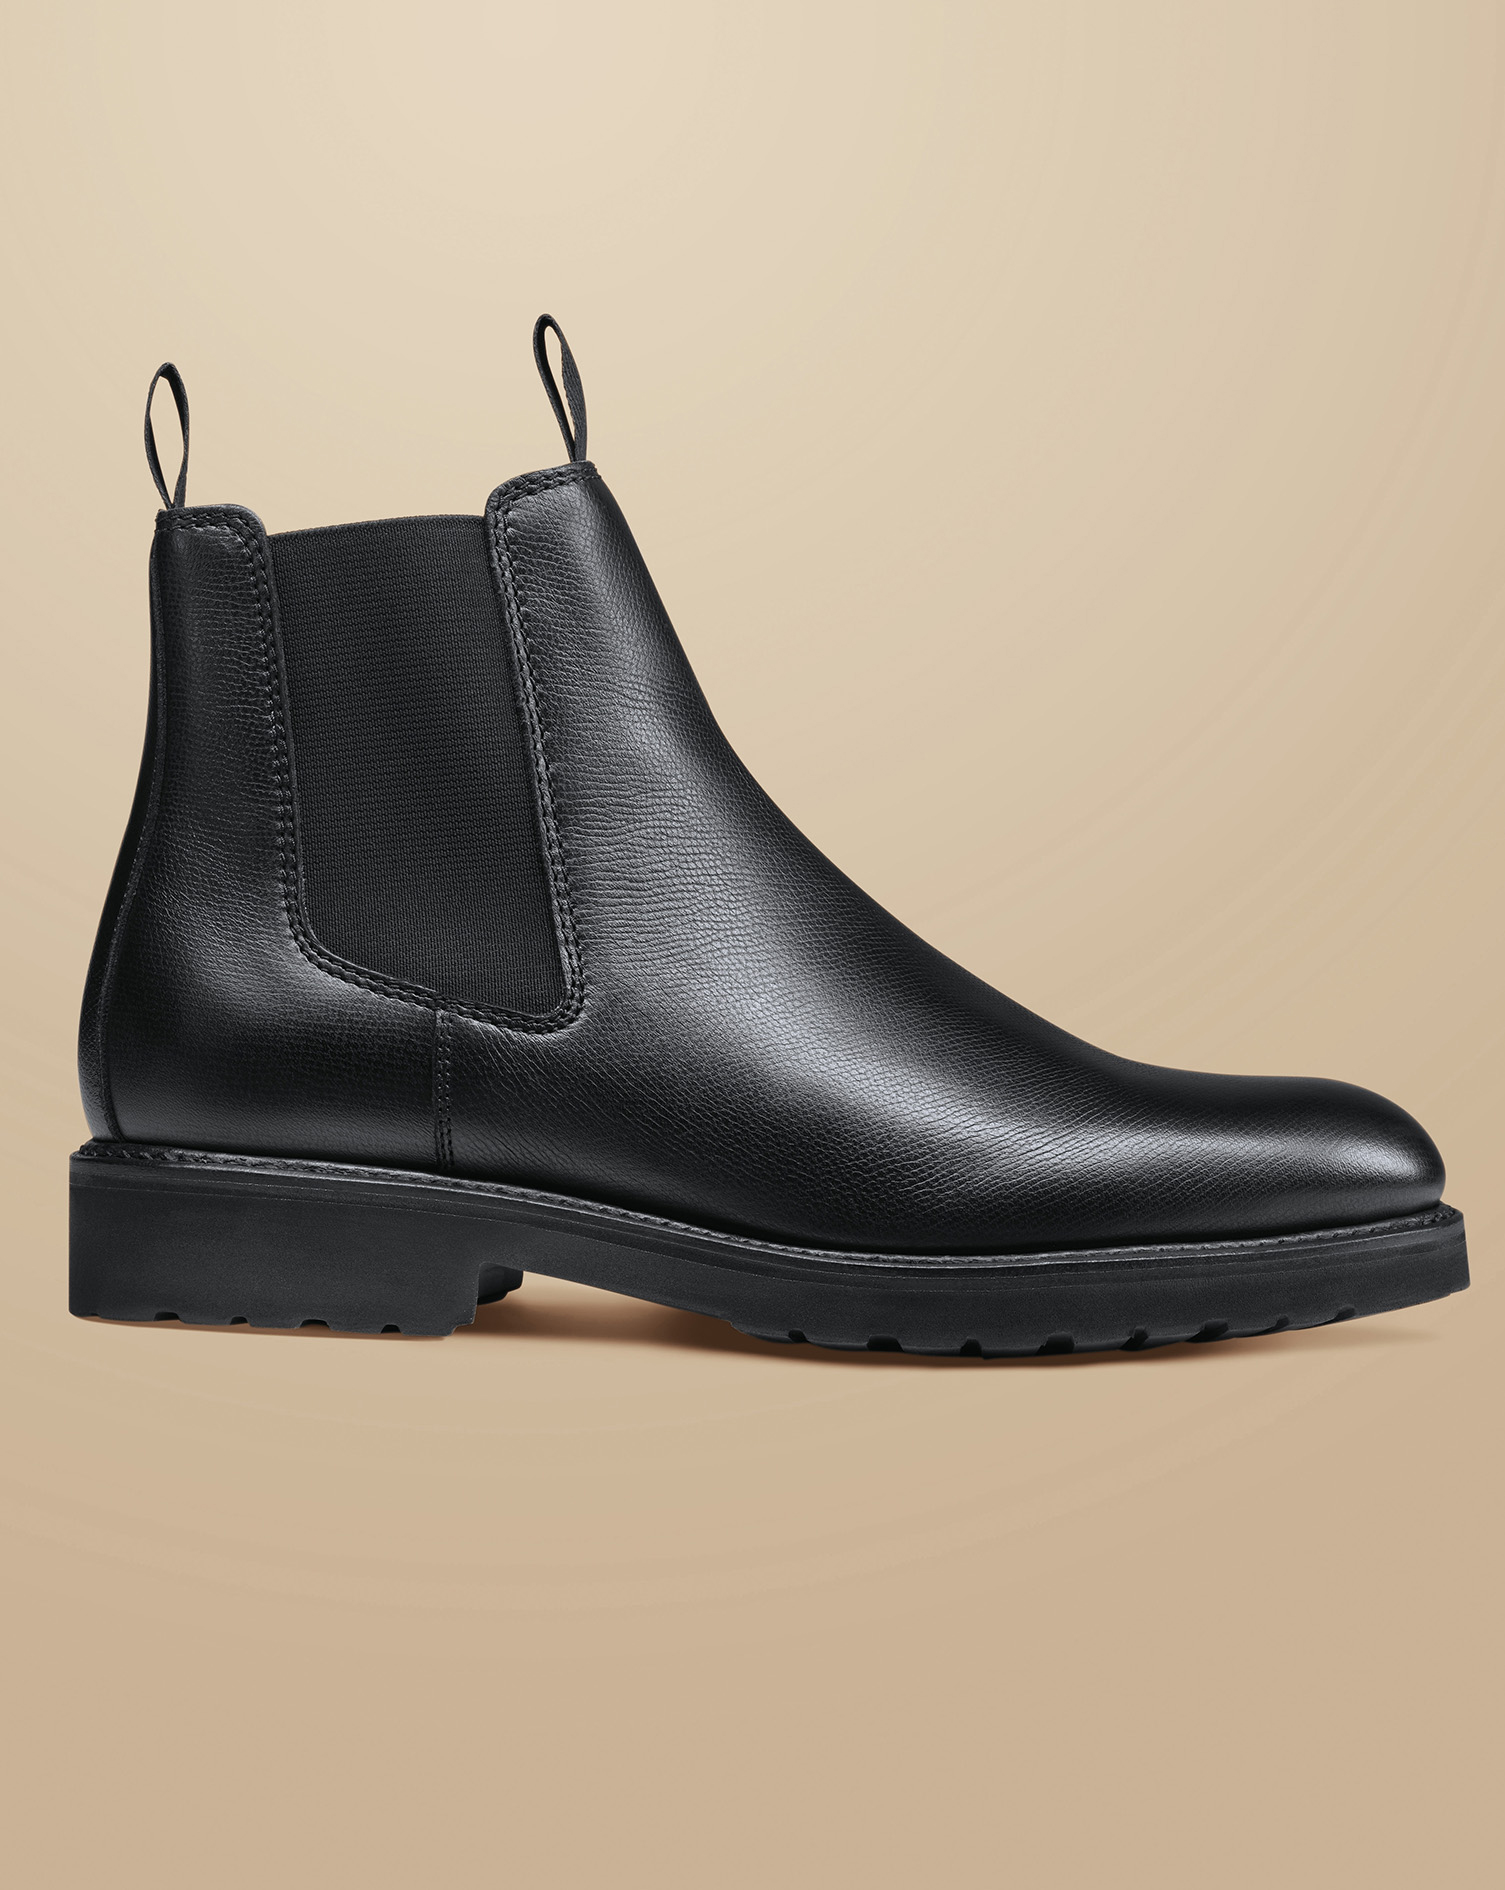 Men's Charles Tyrwhitt Rubber Sole Grain Leather Chelsea Boots - Black Size 9
